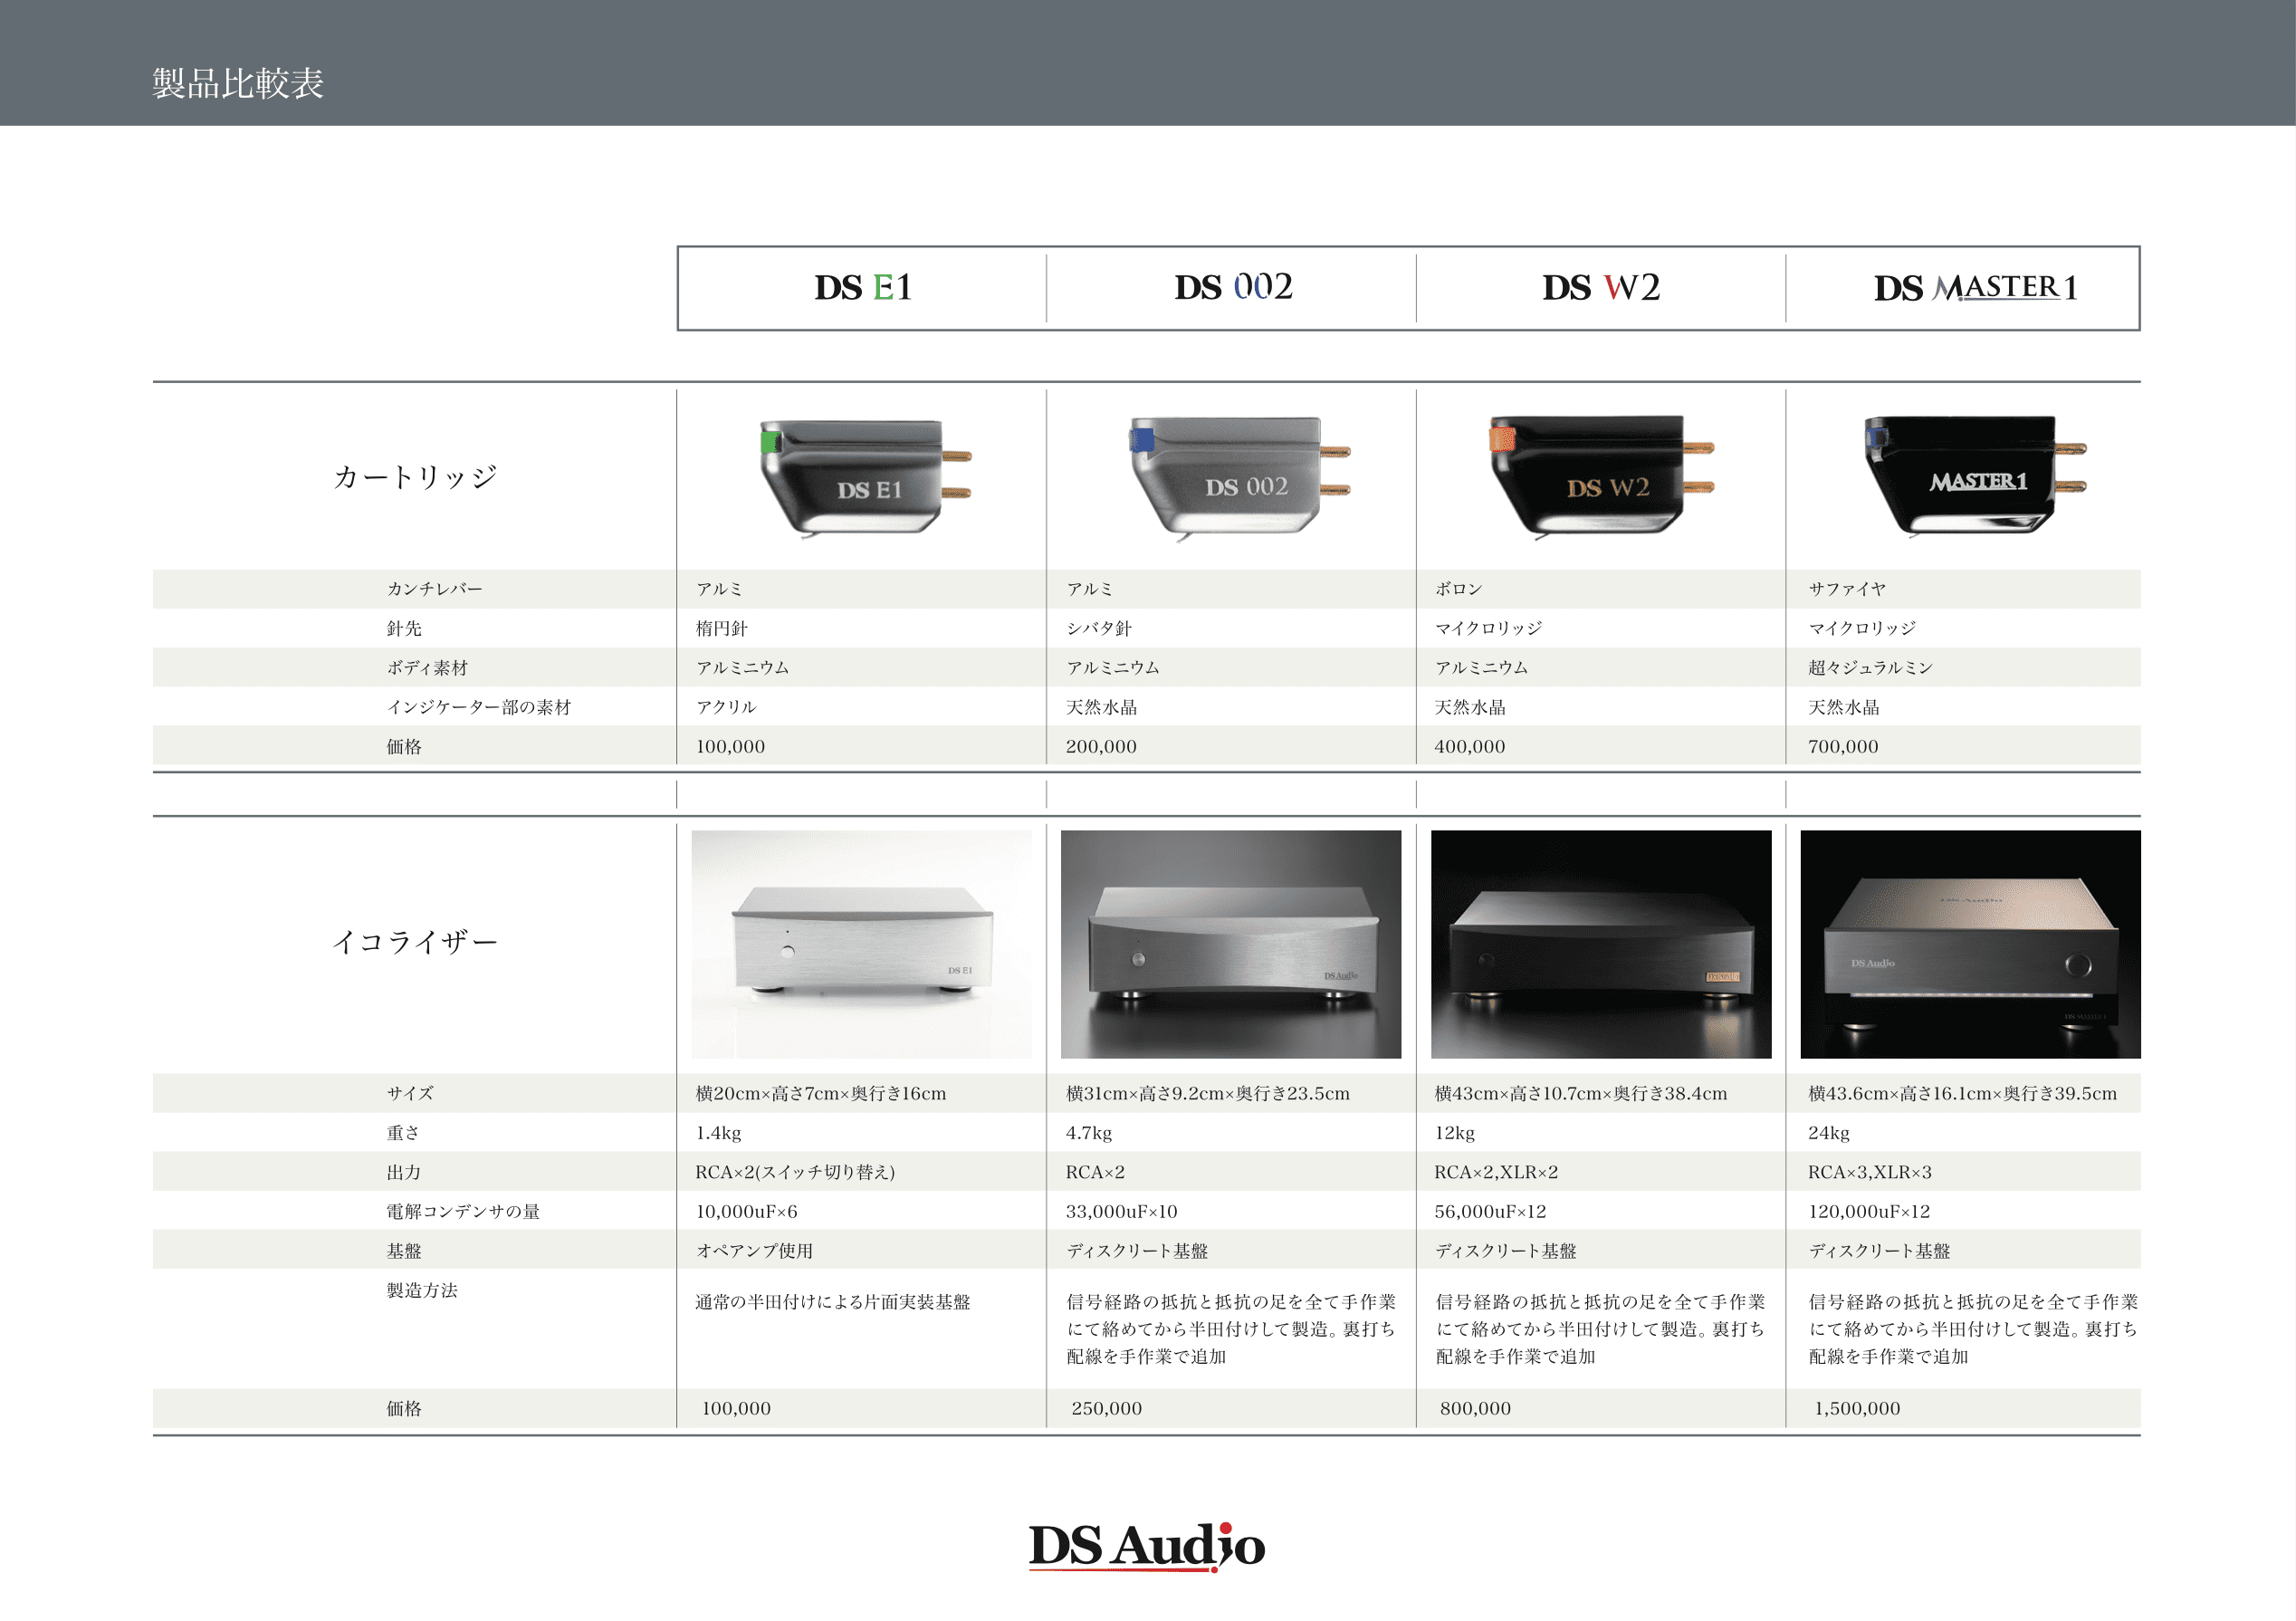 DS Audio 全製品スペック比較表